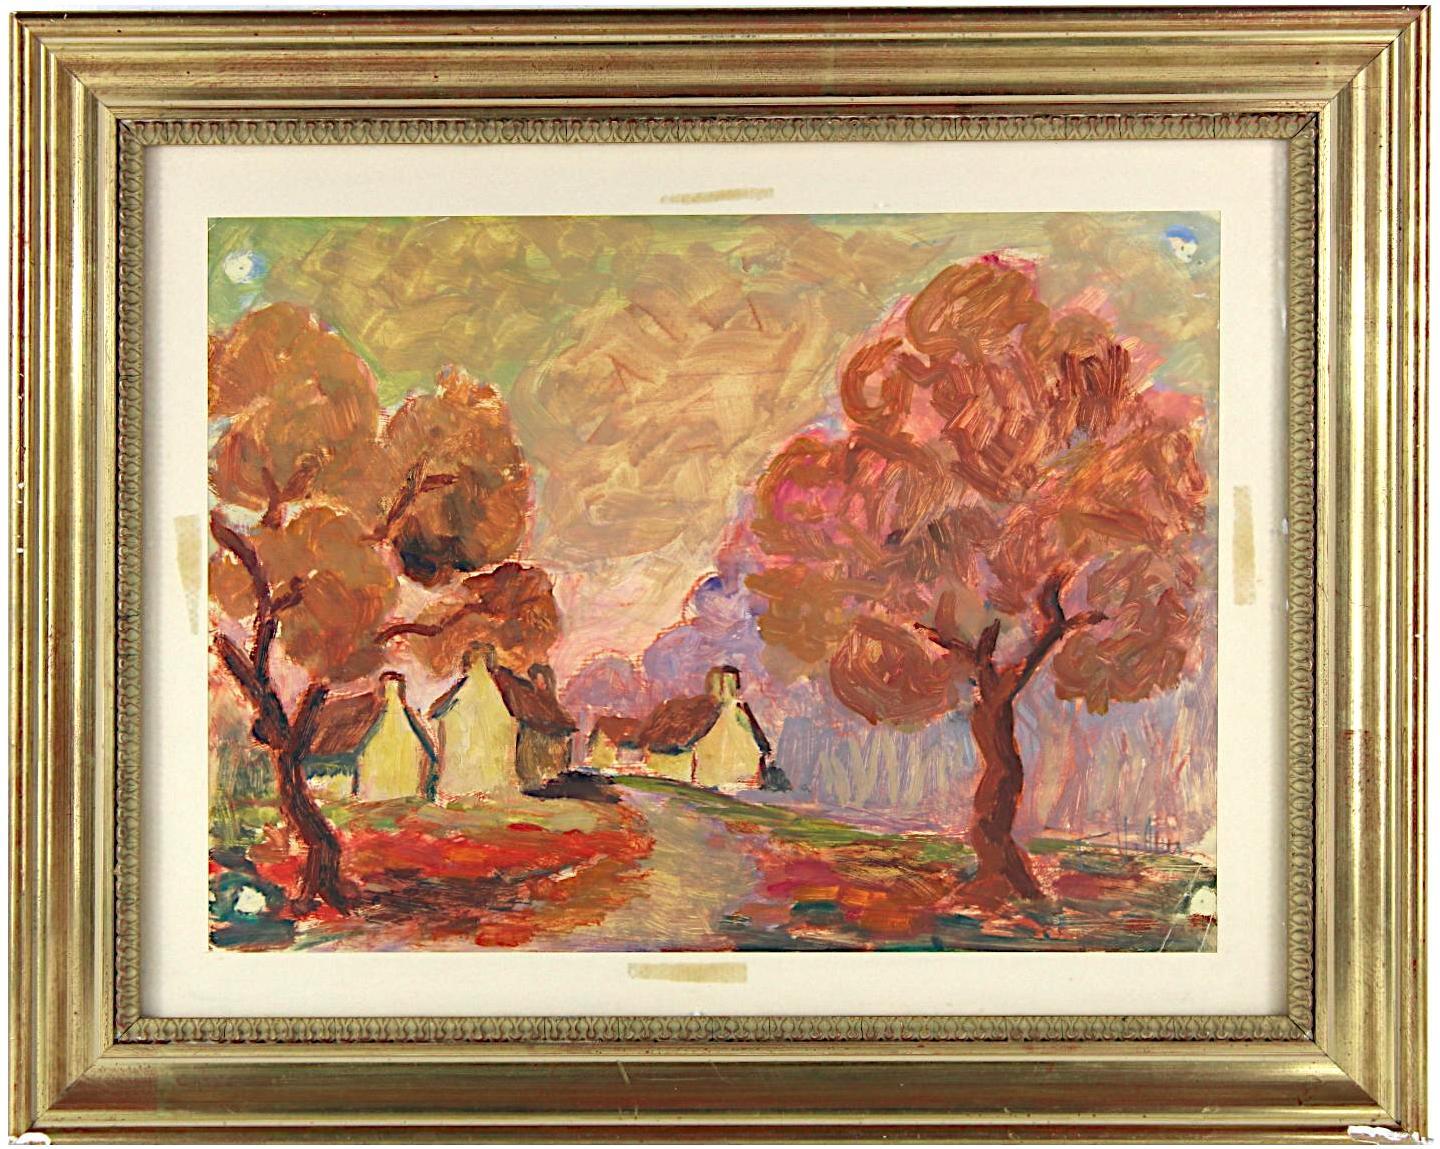 Ferdinand Villuis Landscape Painting - Red Landscape with trees, Original Gouache on Paper, Impressionist style